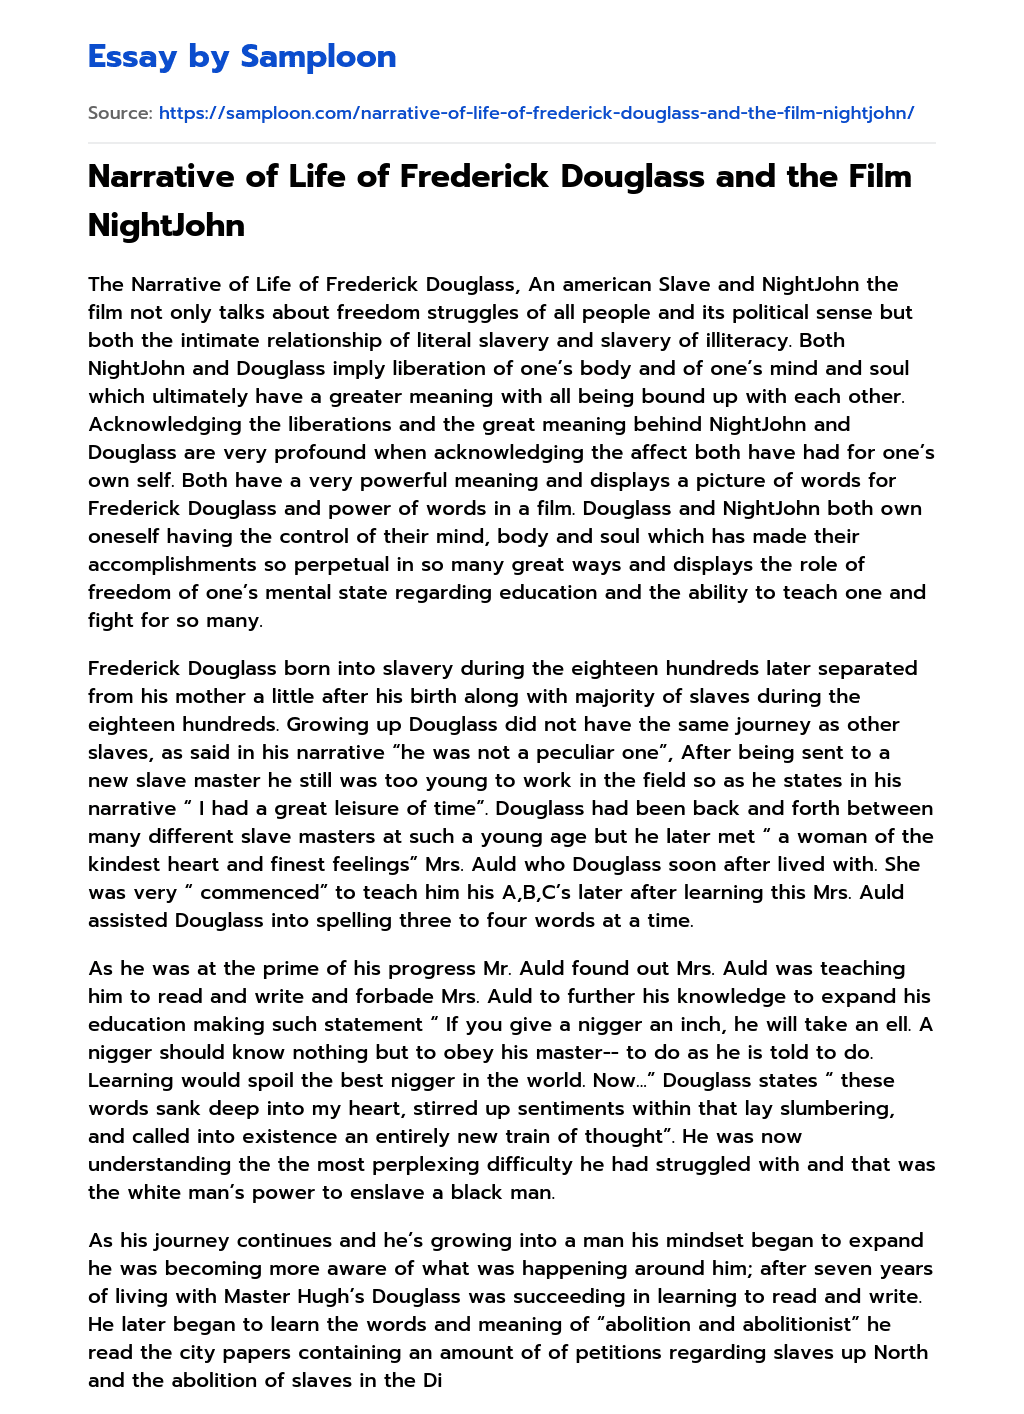 Narrative of Life of Frederick Douglass and the Film NightJohn essay